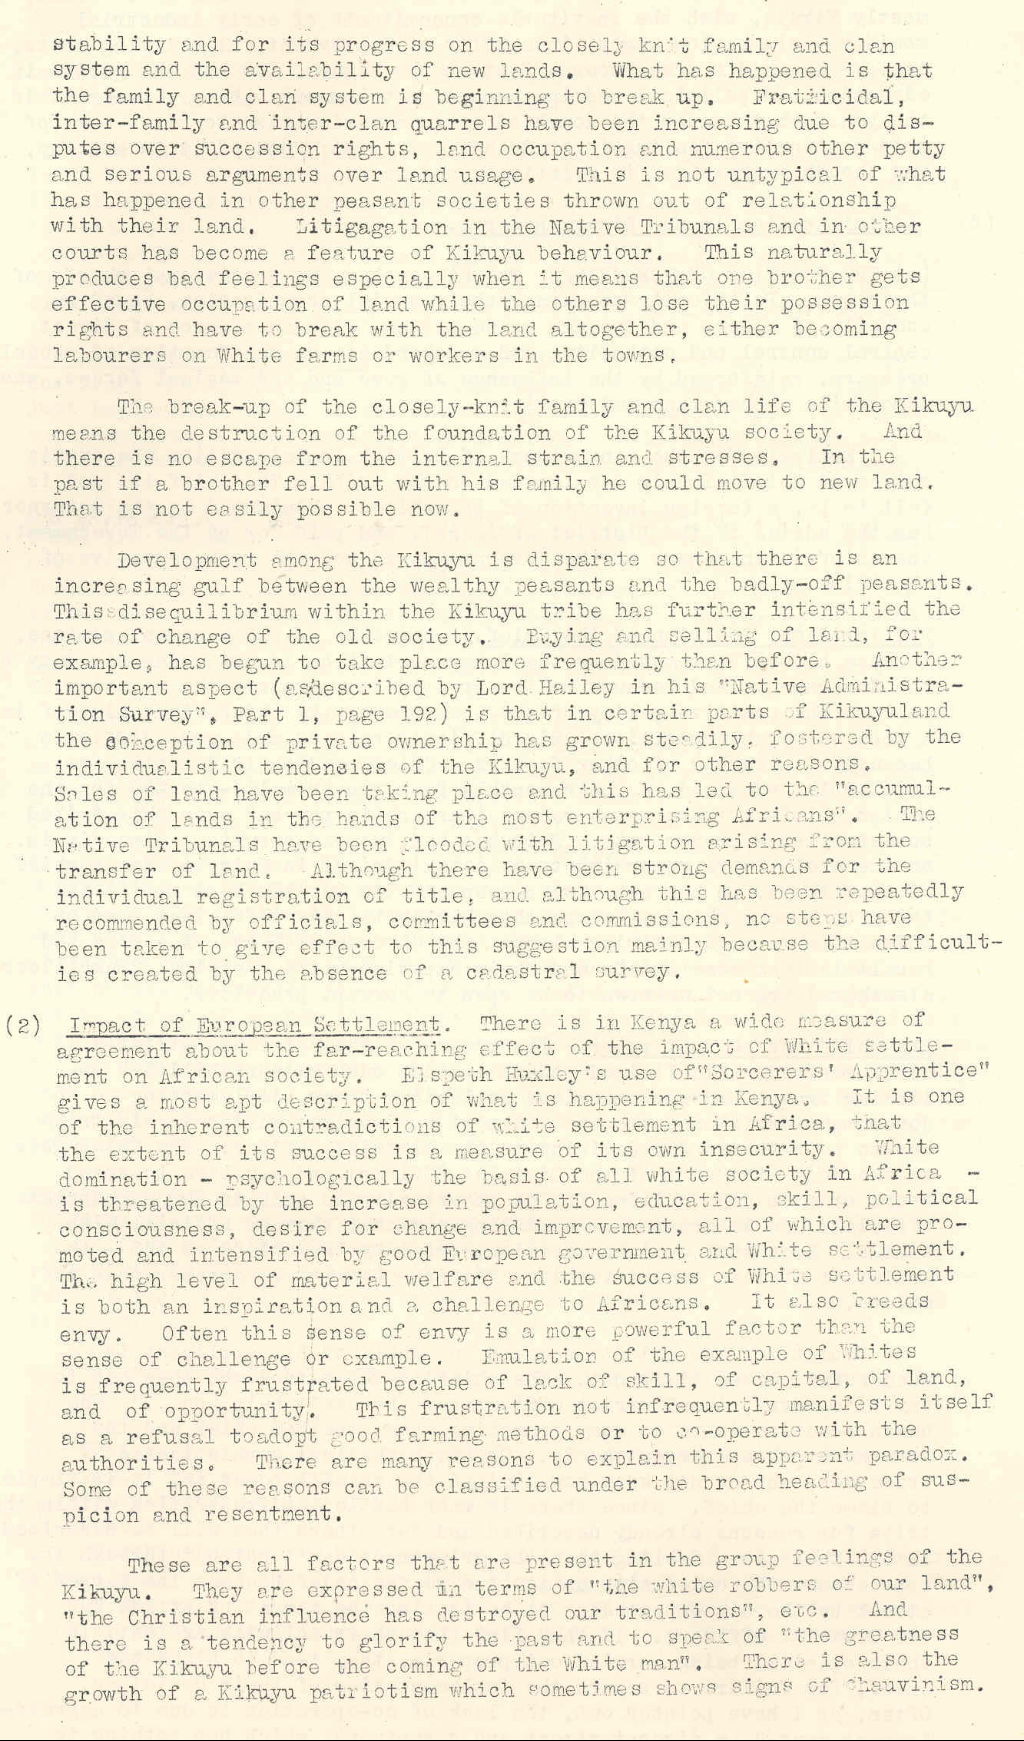 'Background to Mau Mau: an analysis of problems in the Kikuyu Reserve', 1952